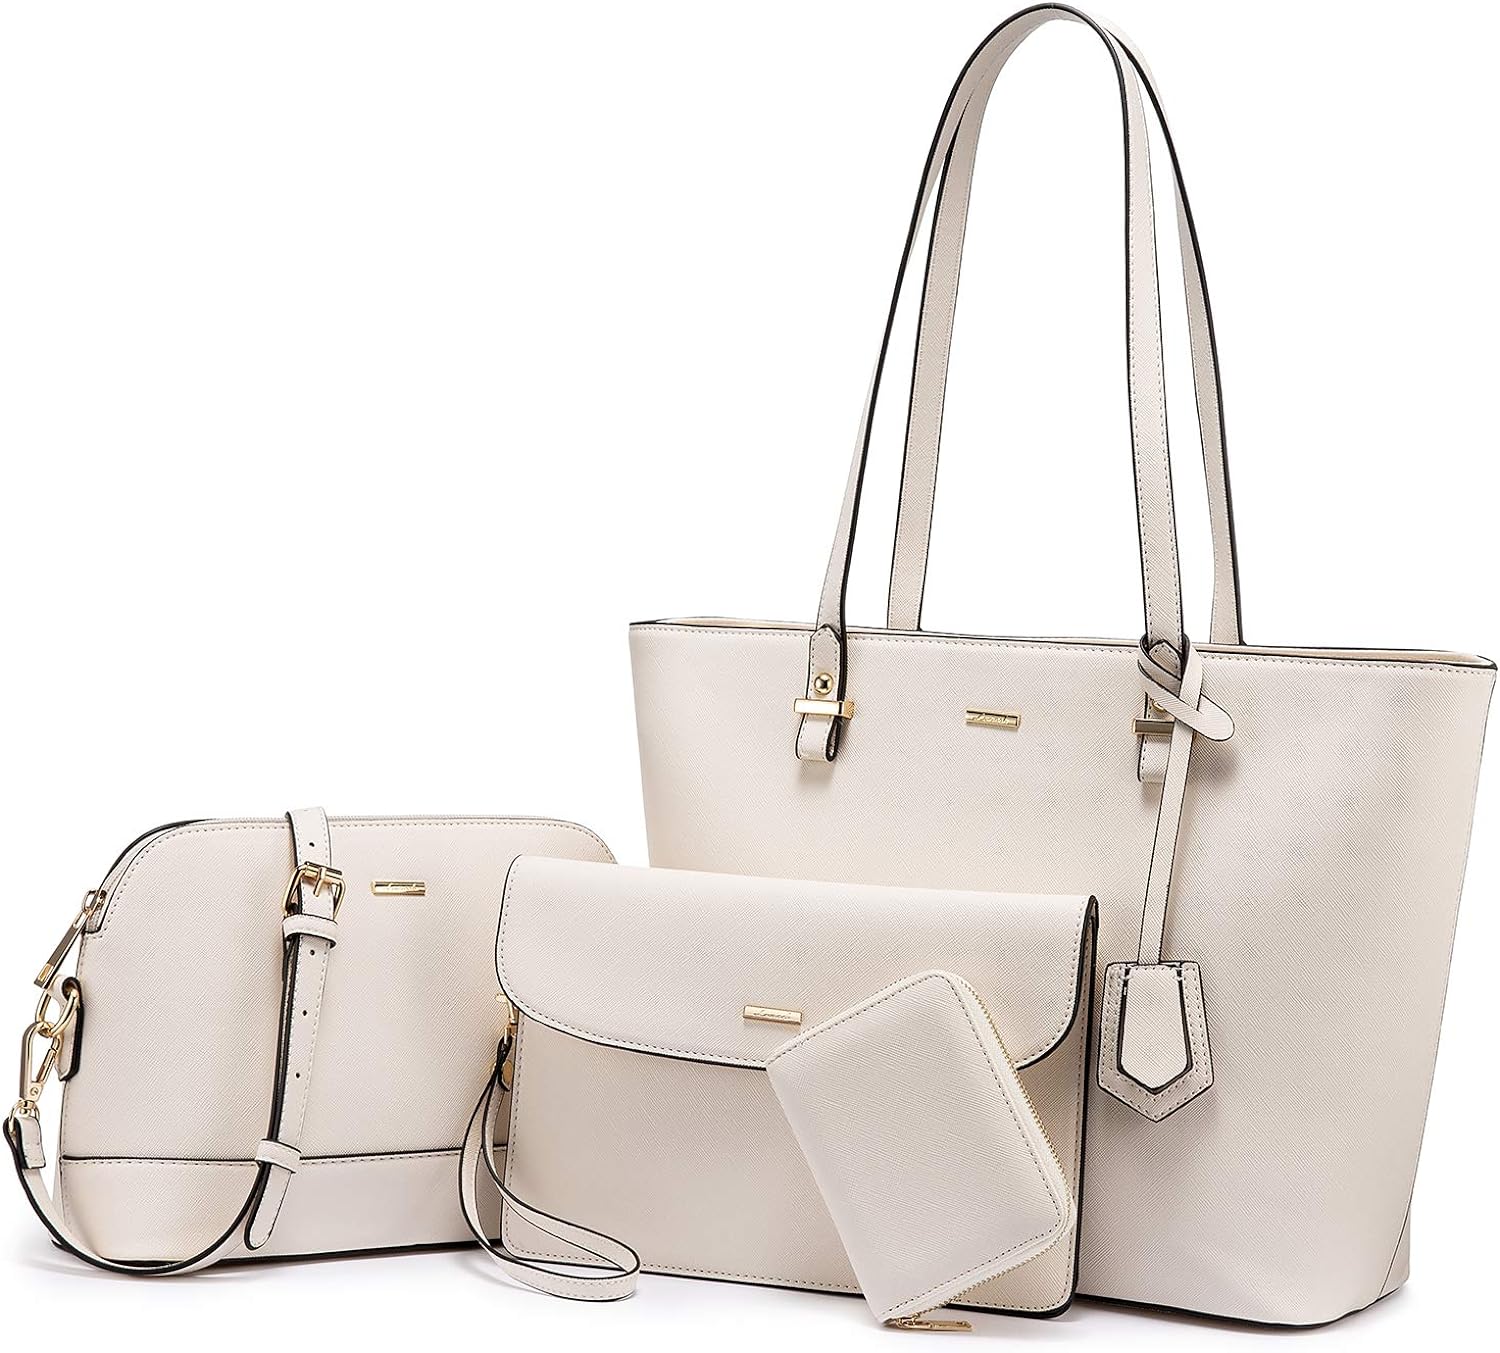 Buy Handbags for Women Shoulder Bags Tote Satchel Hobo 3pcs Purse Set  Online in Pakistan. B075FH9VTF